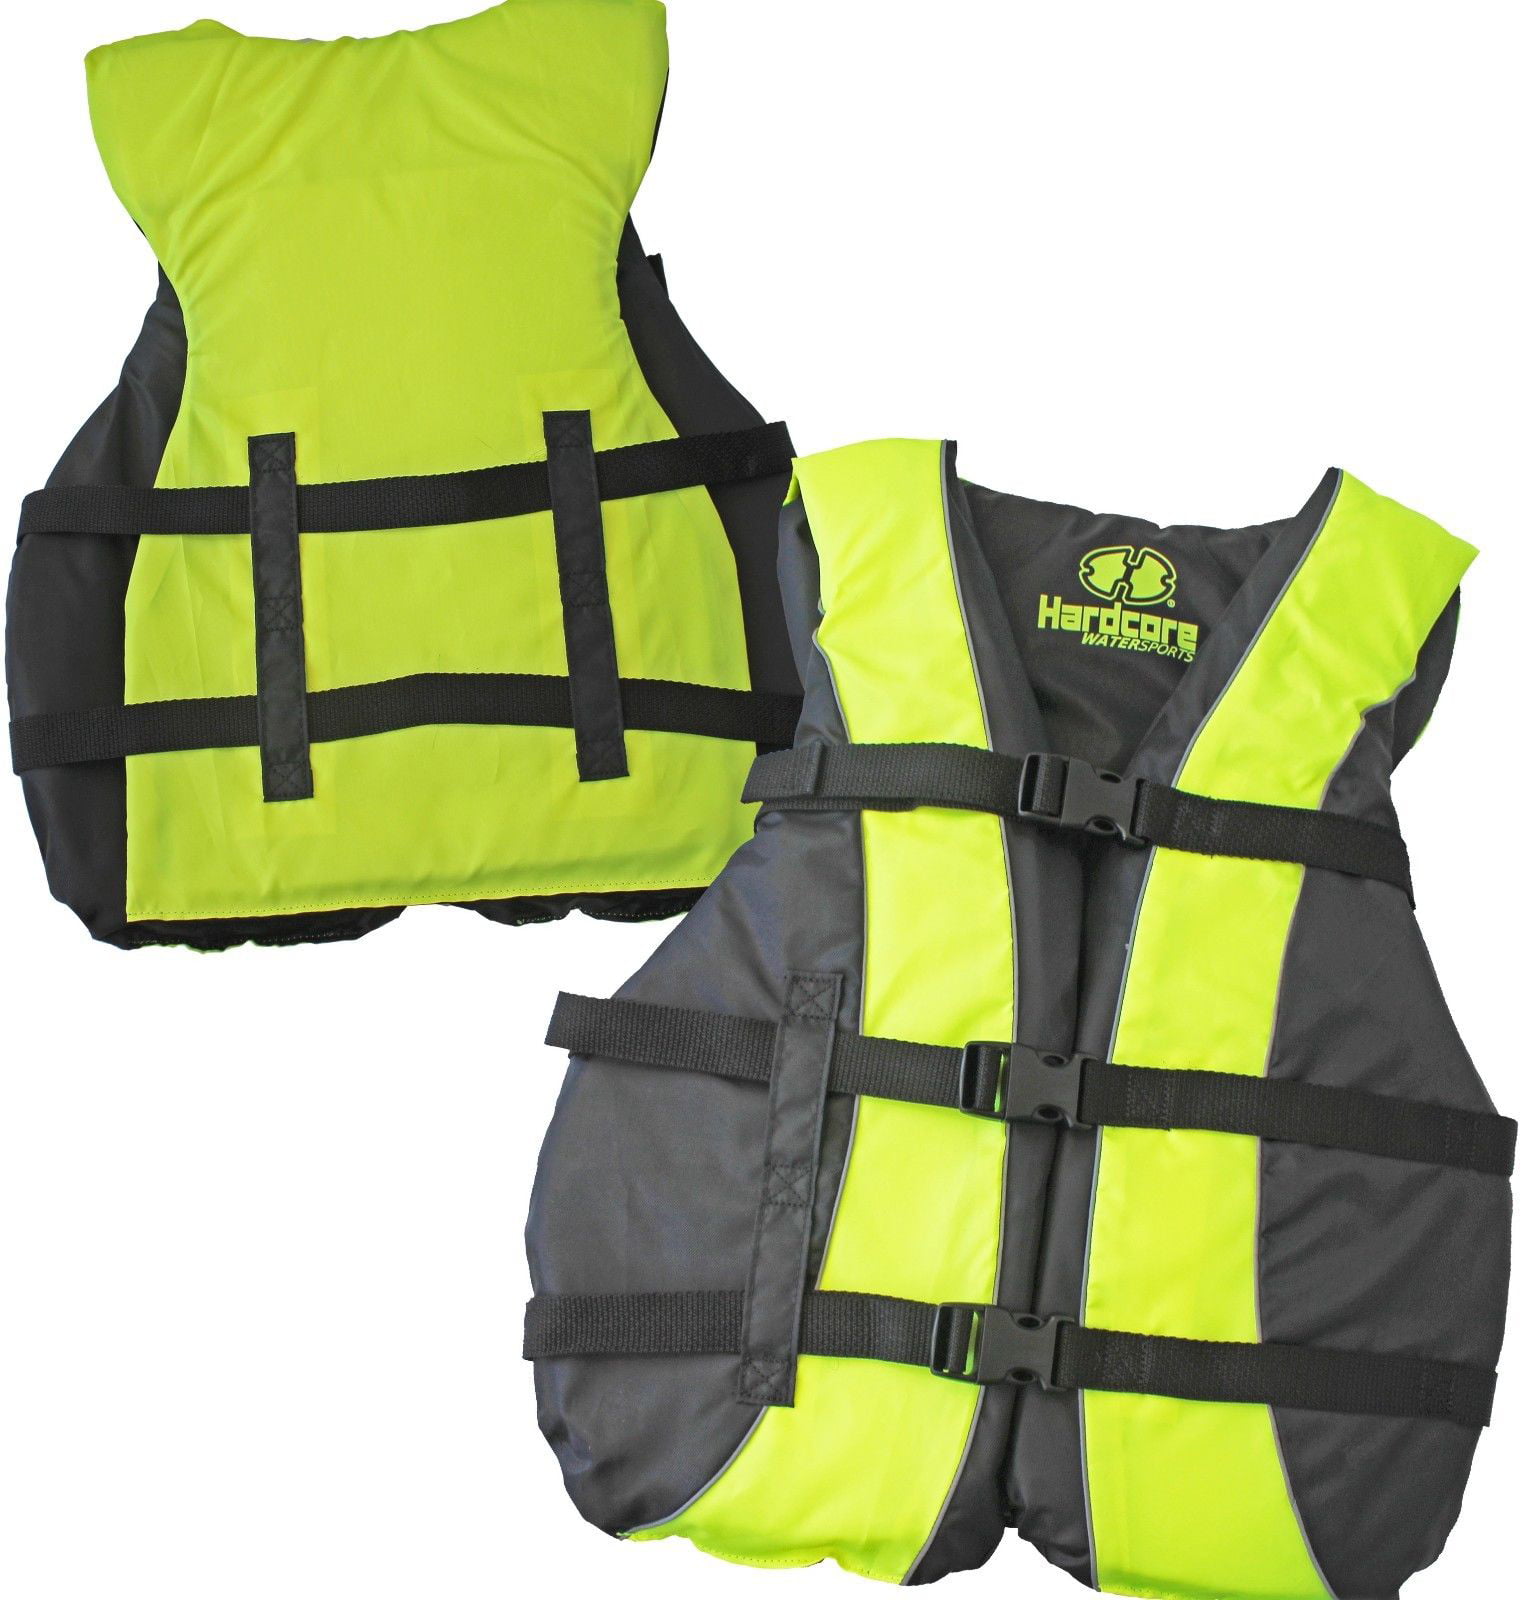 3 PACK Universal Adult Life Vest Flotation USCG Ski Jacket PFD Bright Yellow 